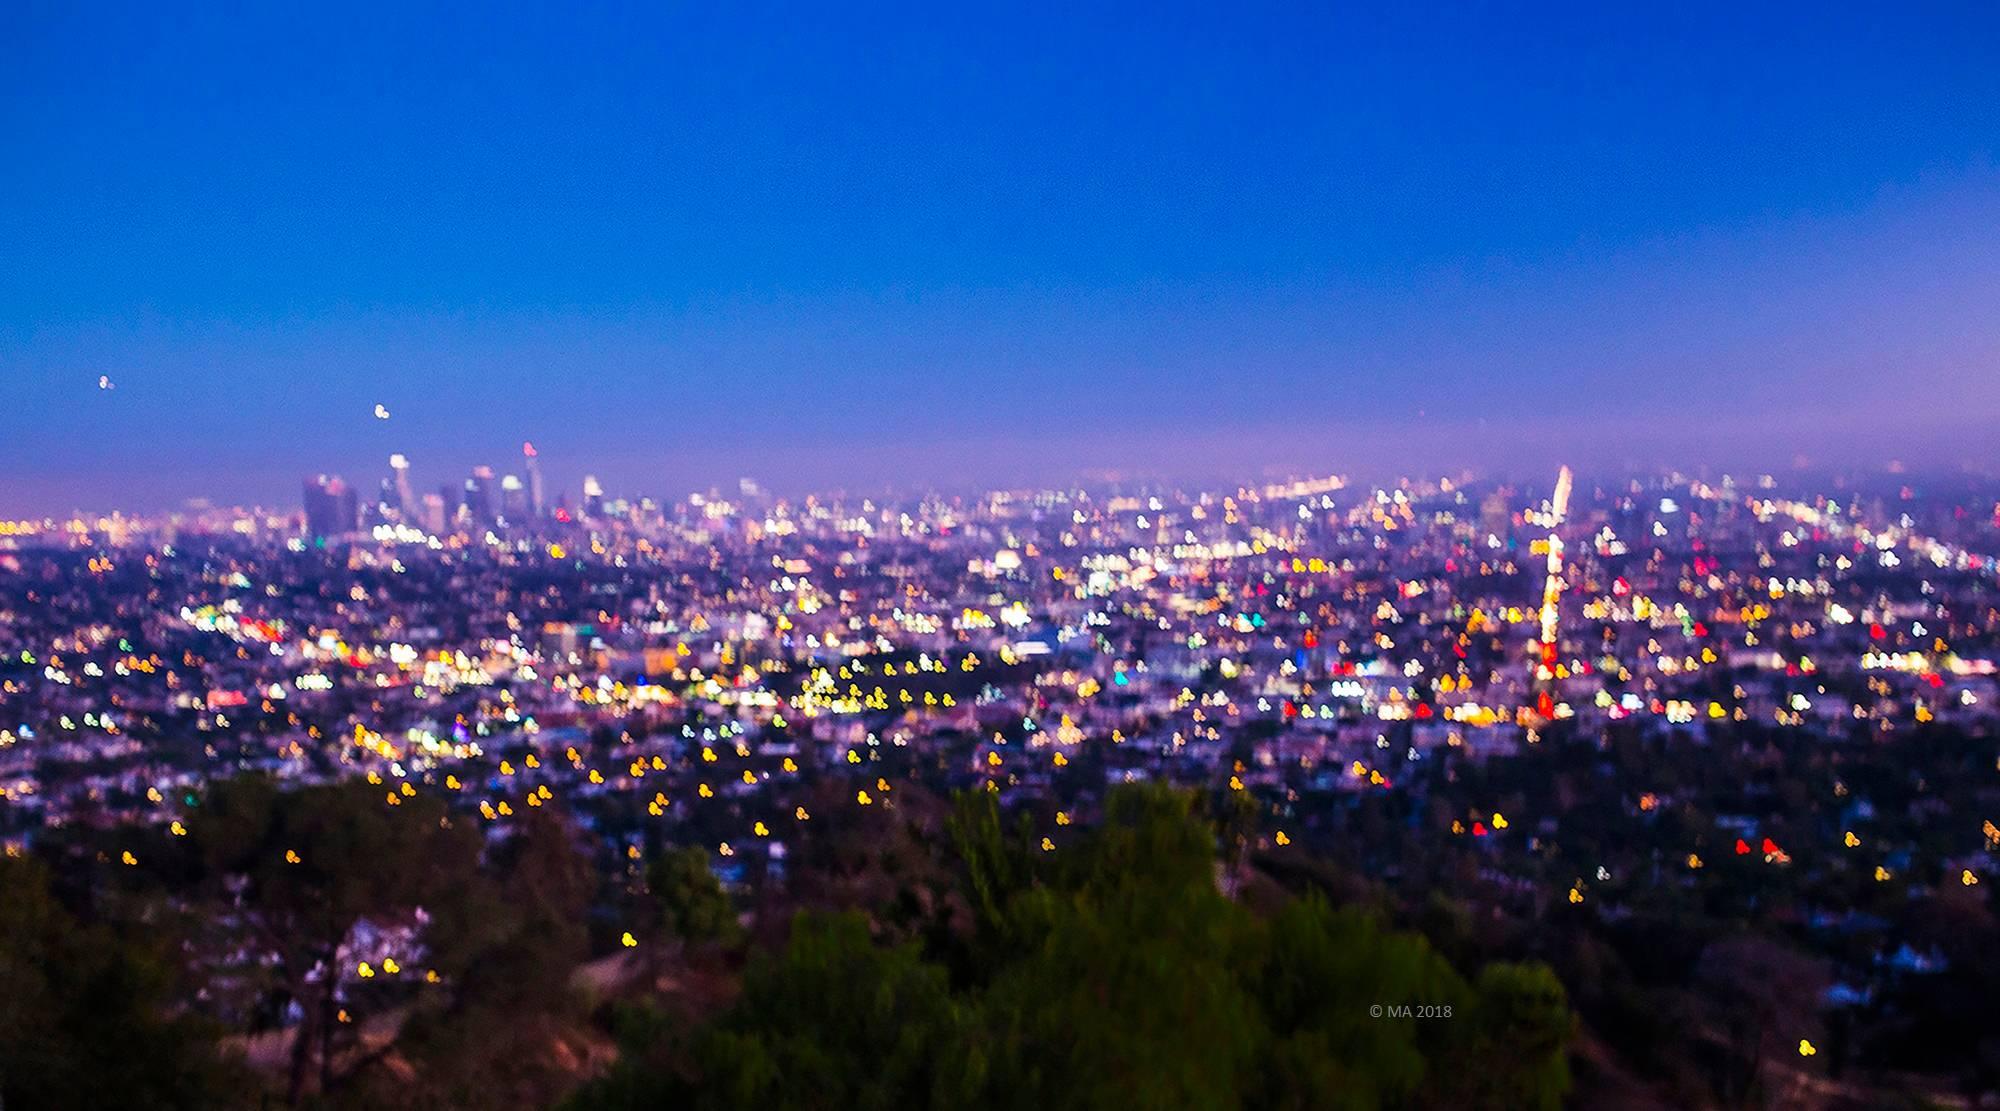 MAE Curates Color Photograph - Los Angeles landscape 1 - large landscape photography, unframed